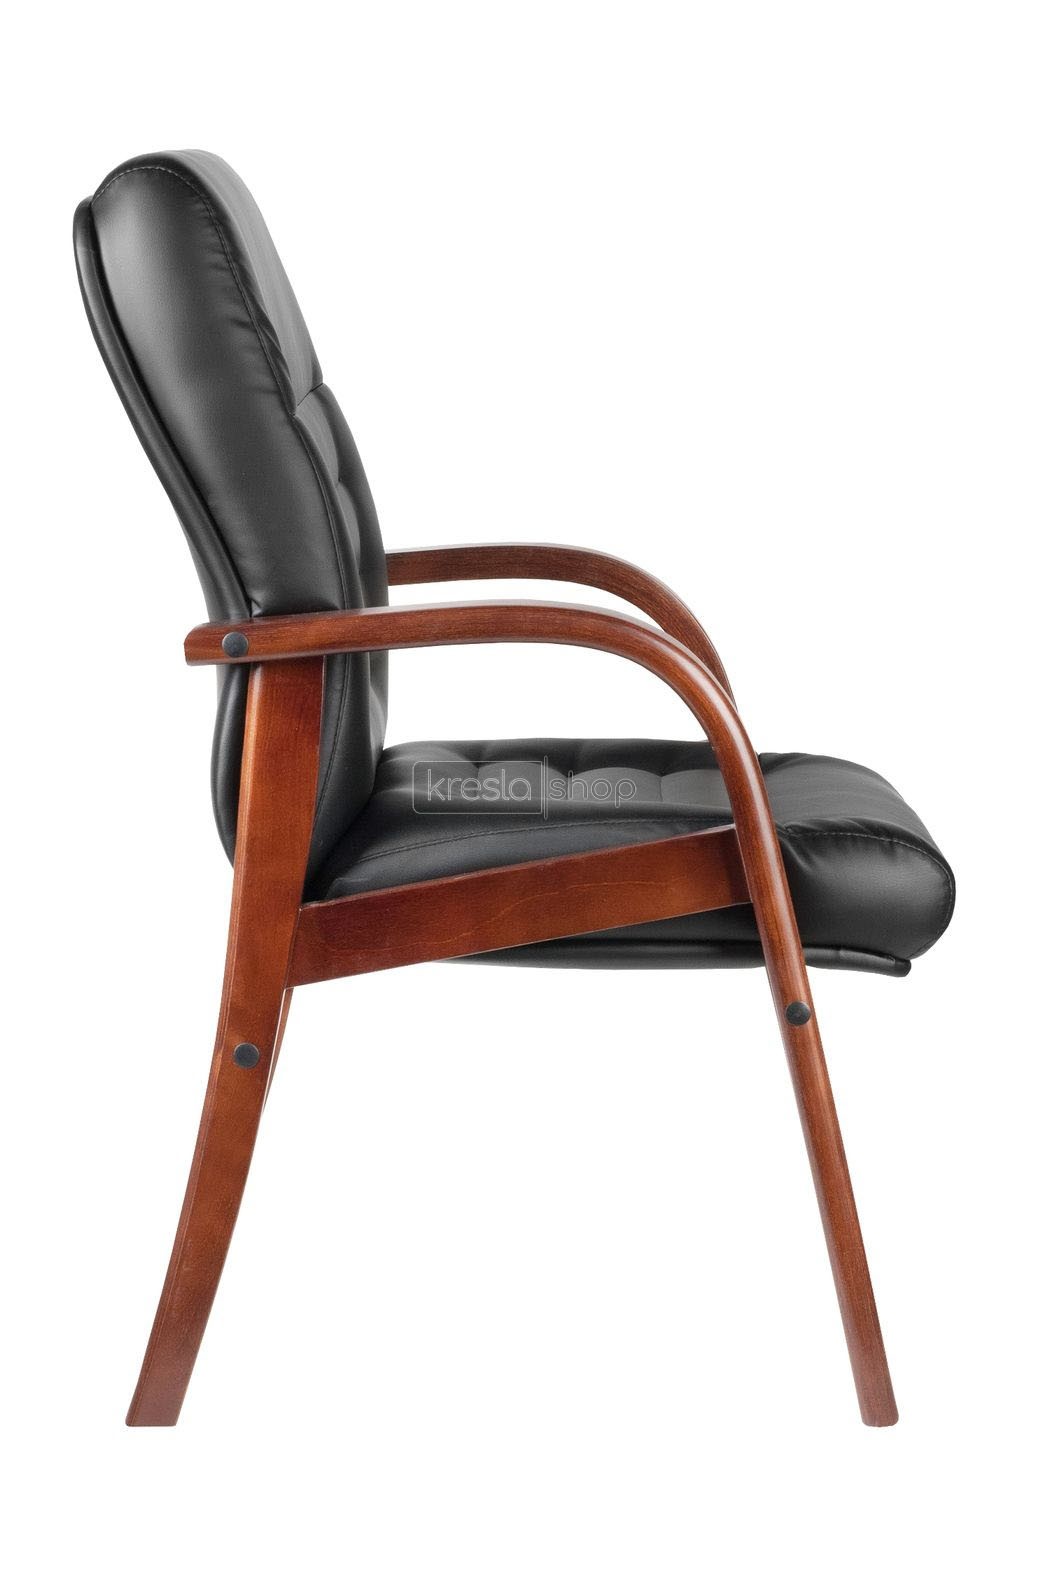 Офисный стул Riva Chair RCH М 155 D/B+Чёрная экокожа